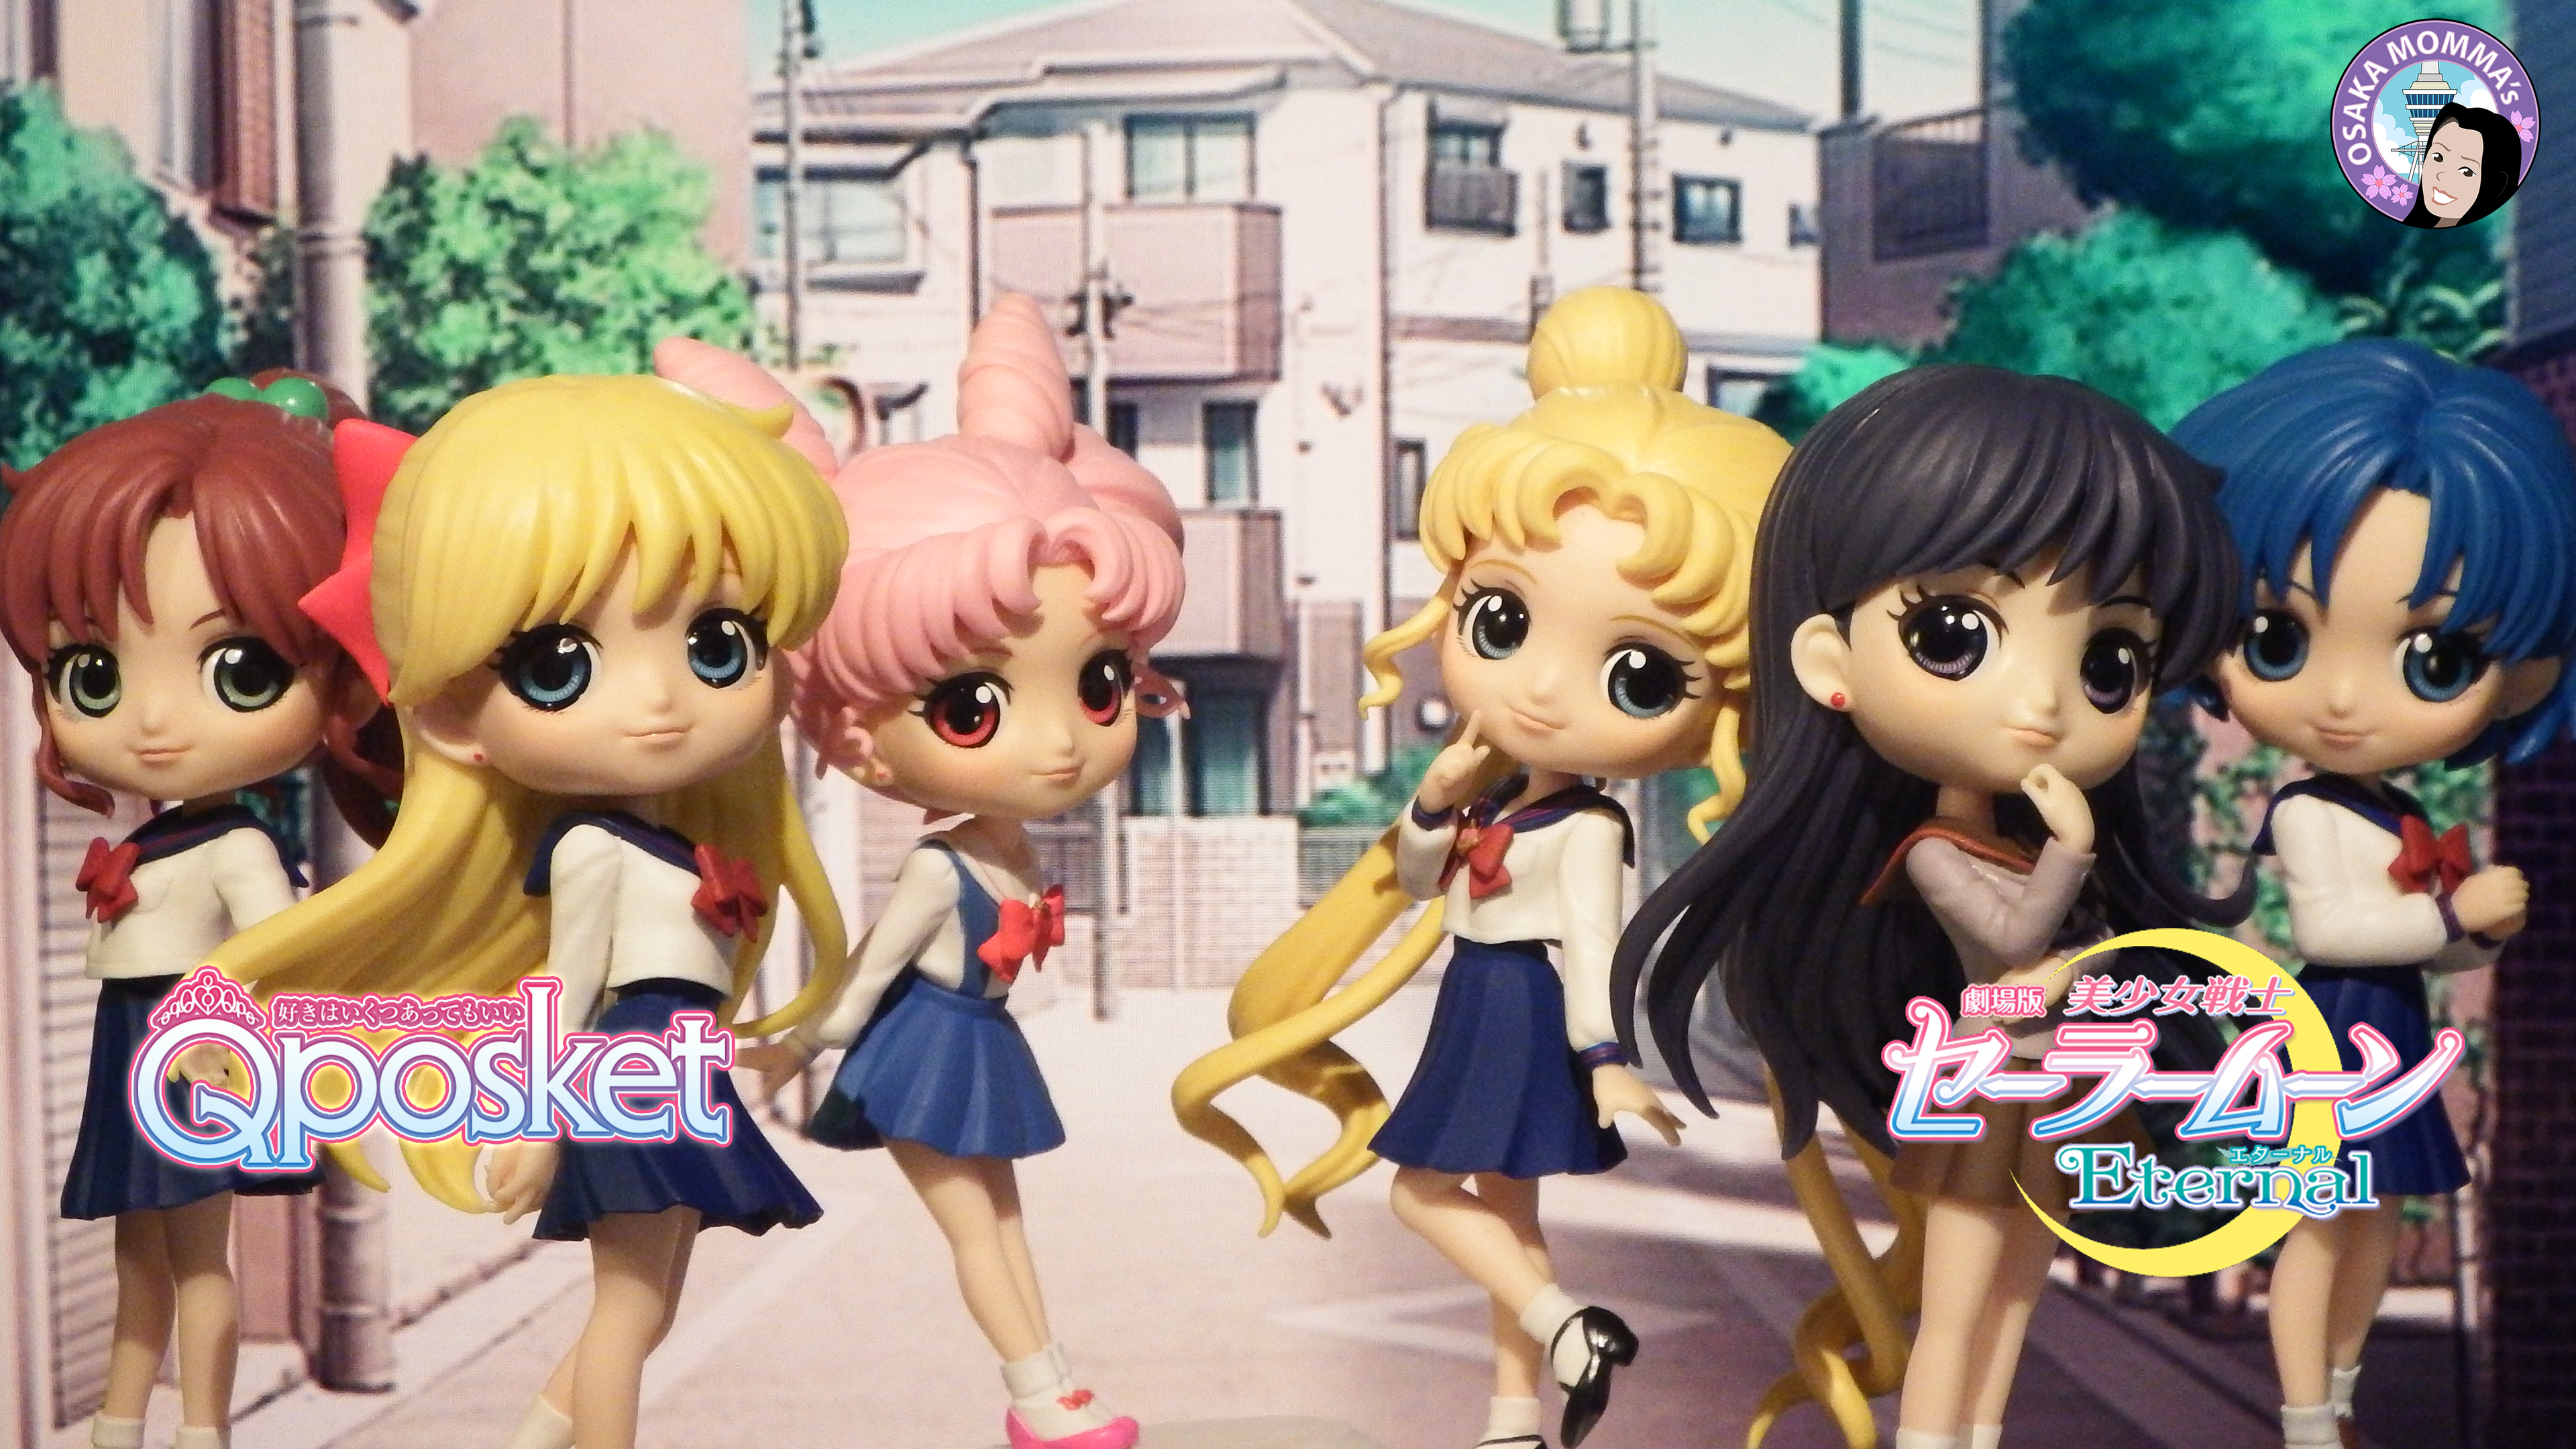 All Sailor Moon Figures